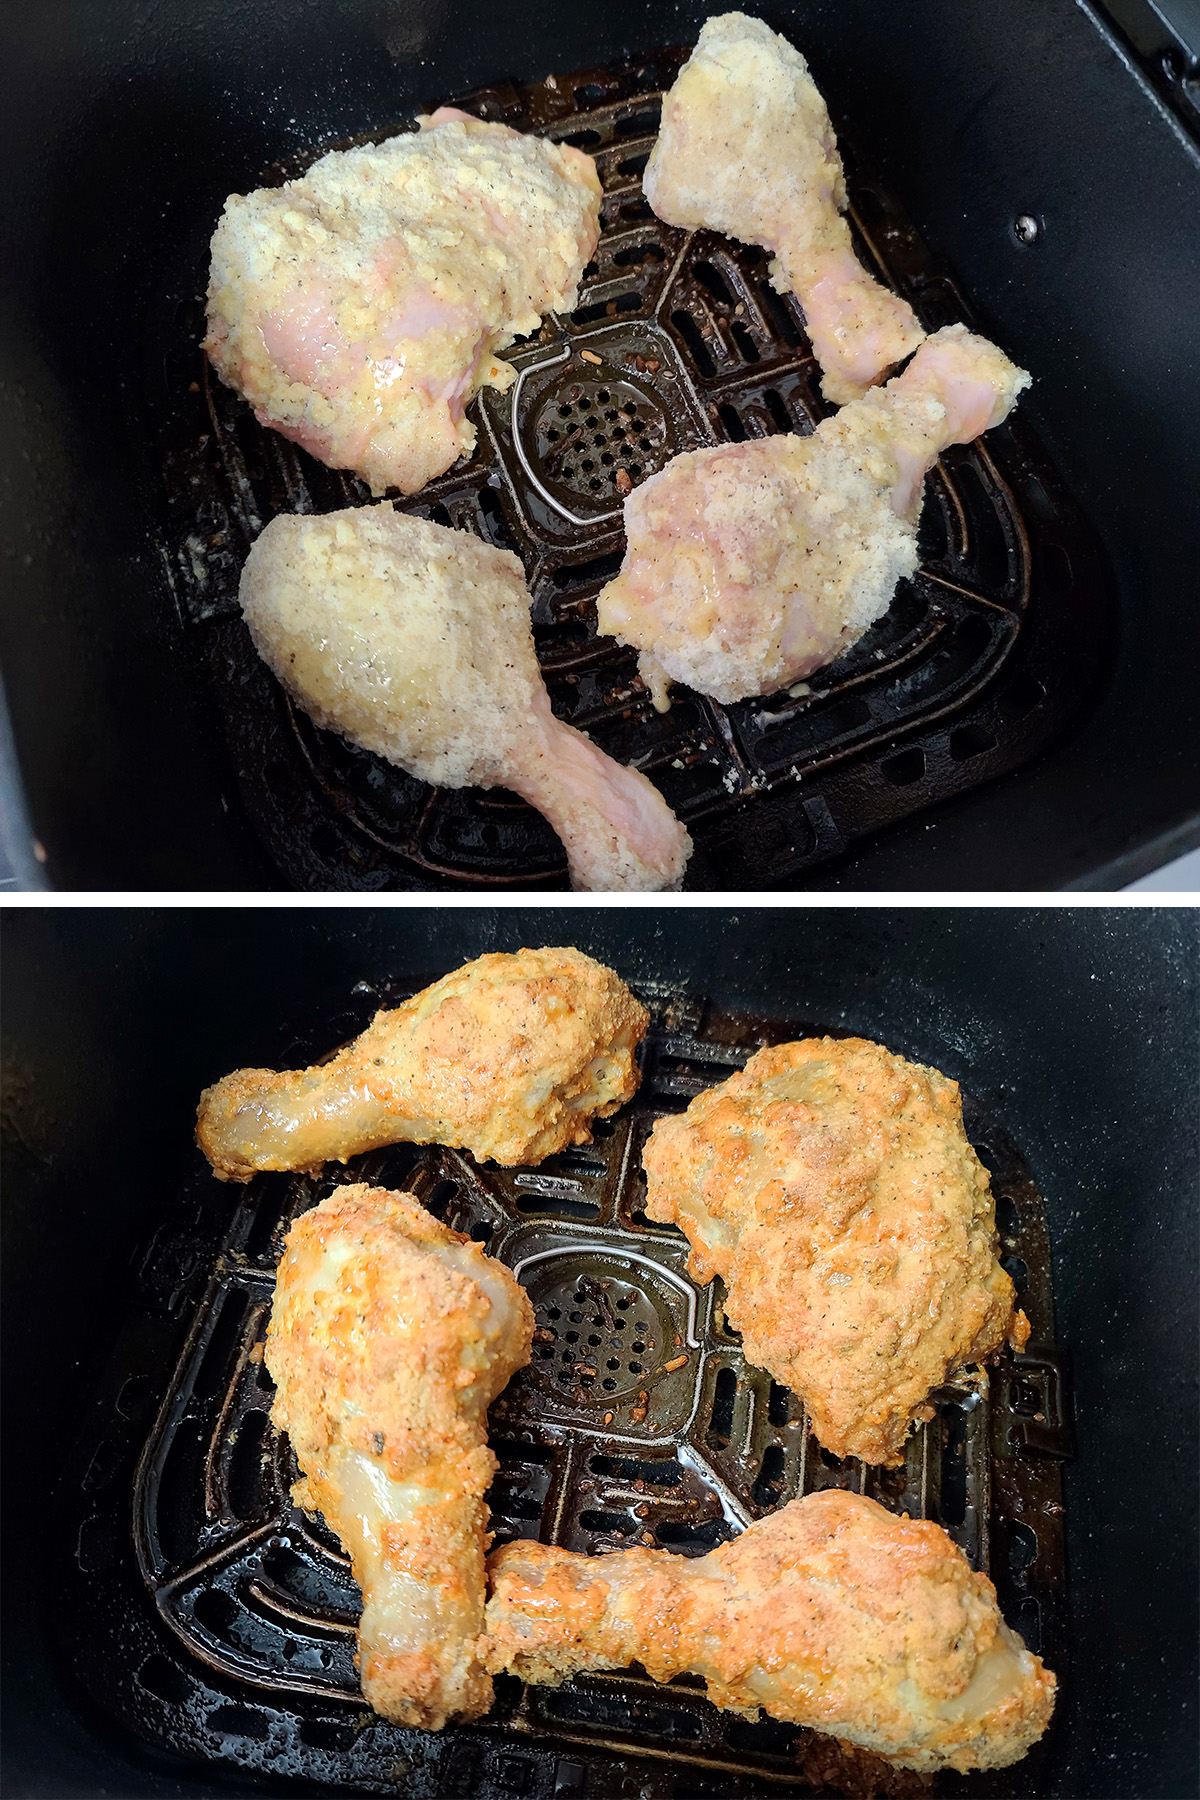 Gluten-free fried chicken being cooked in an air fryer.